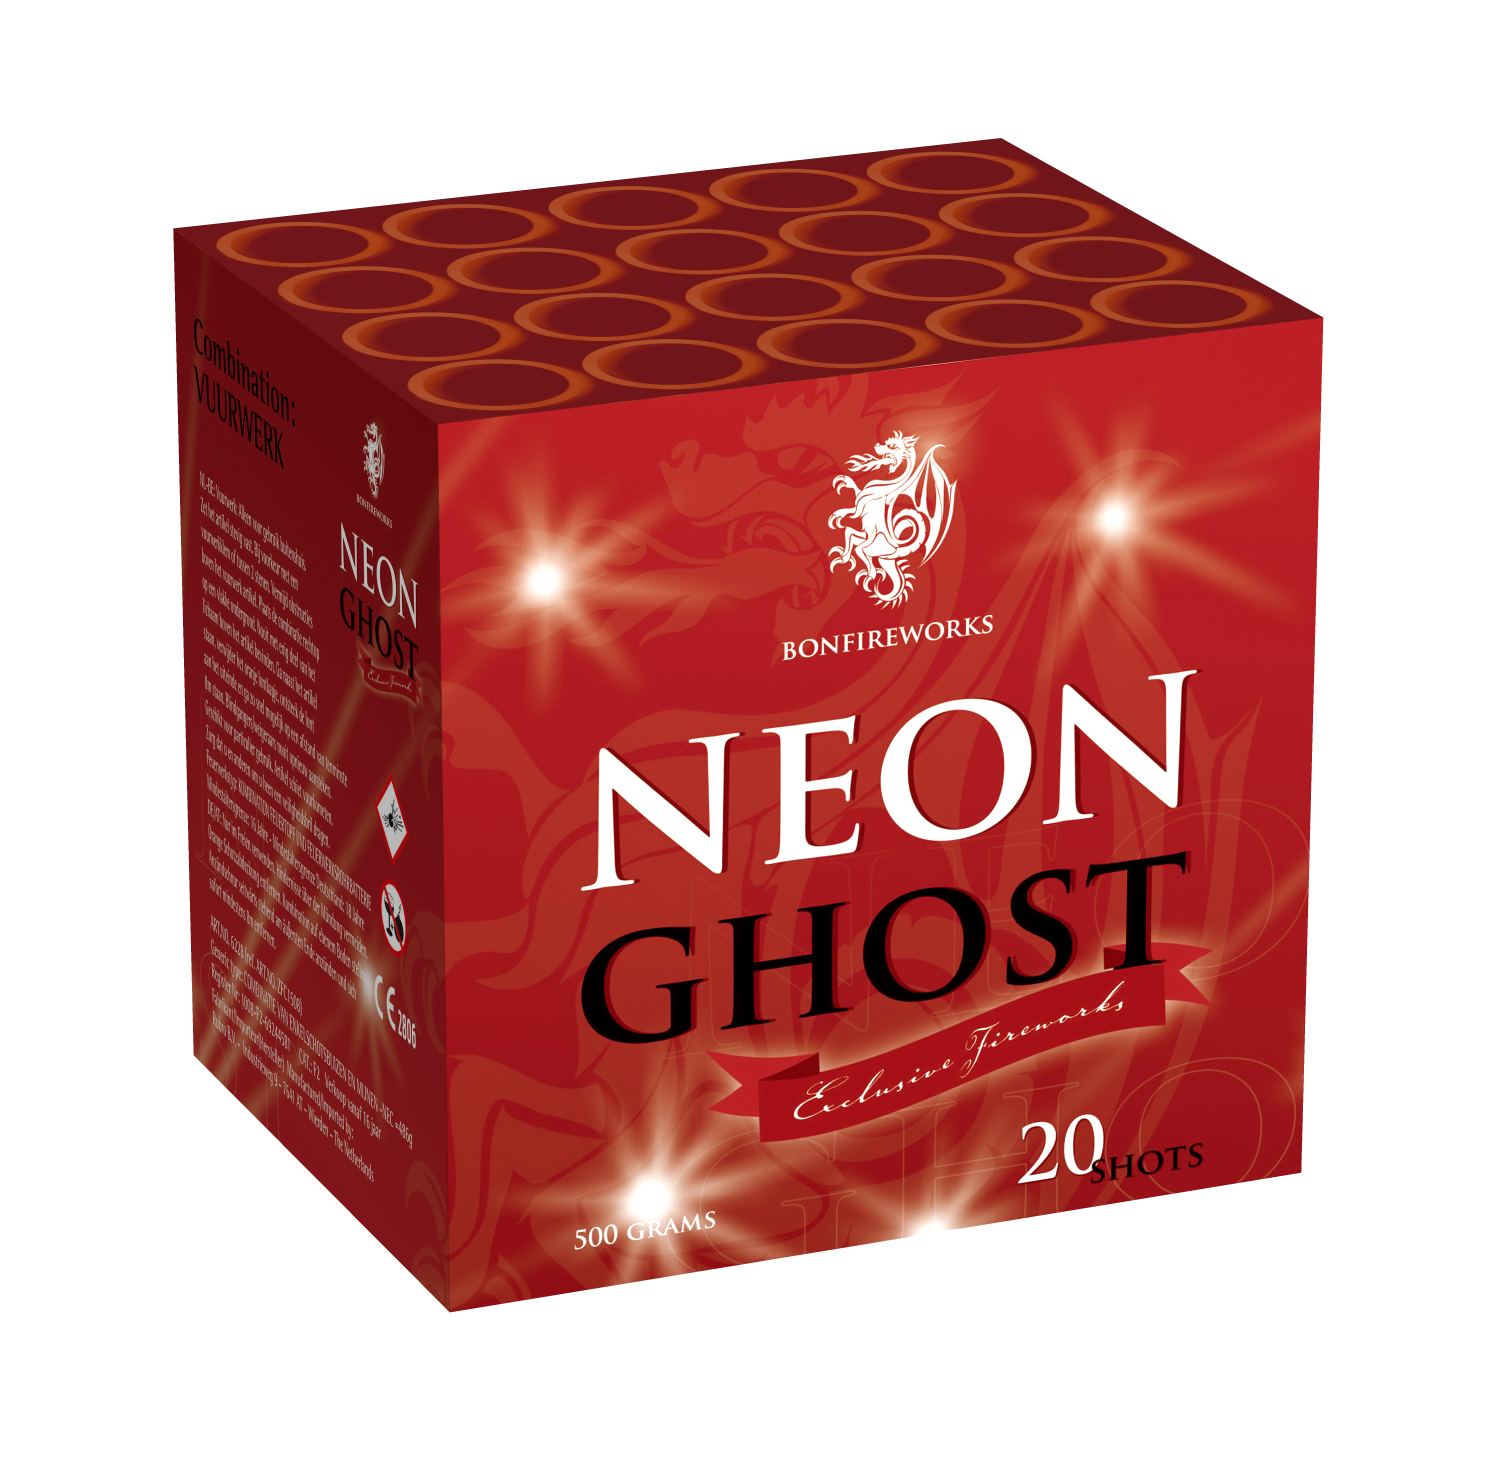 Neon Ghost 20's BONFIREWORKS